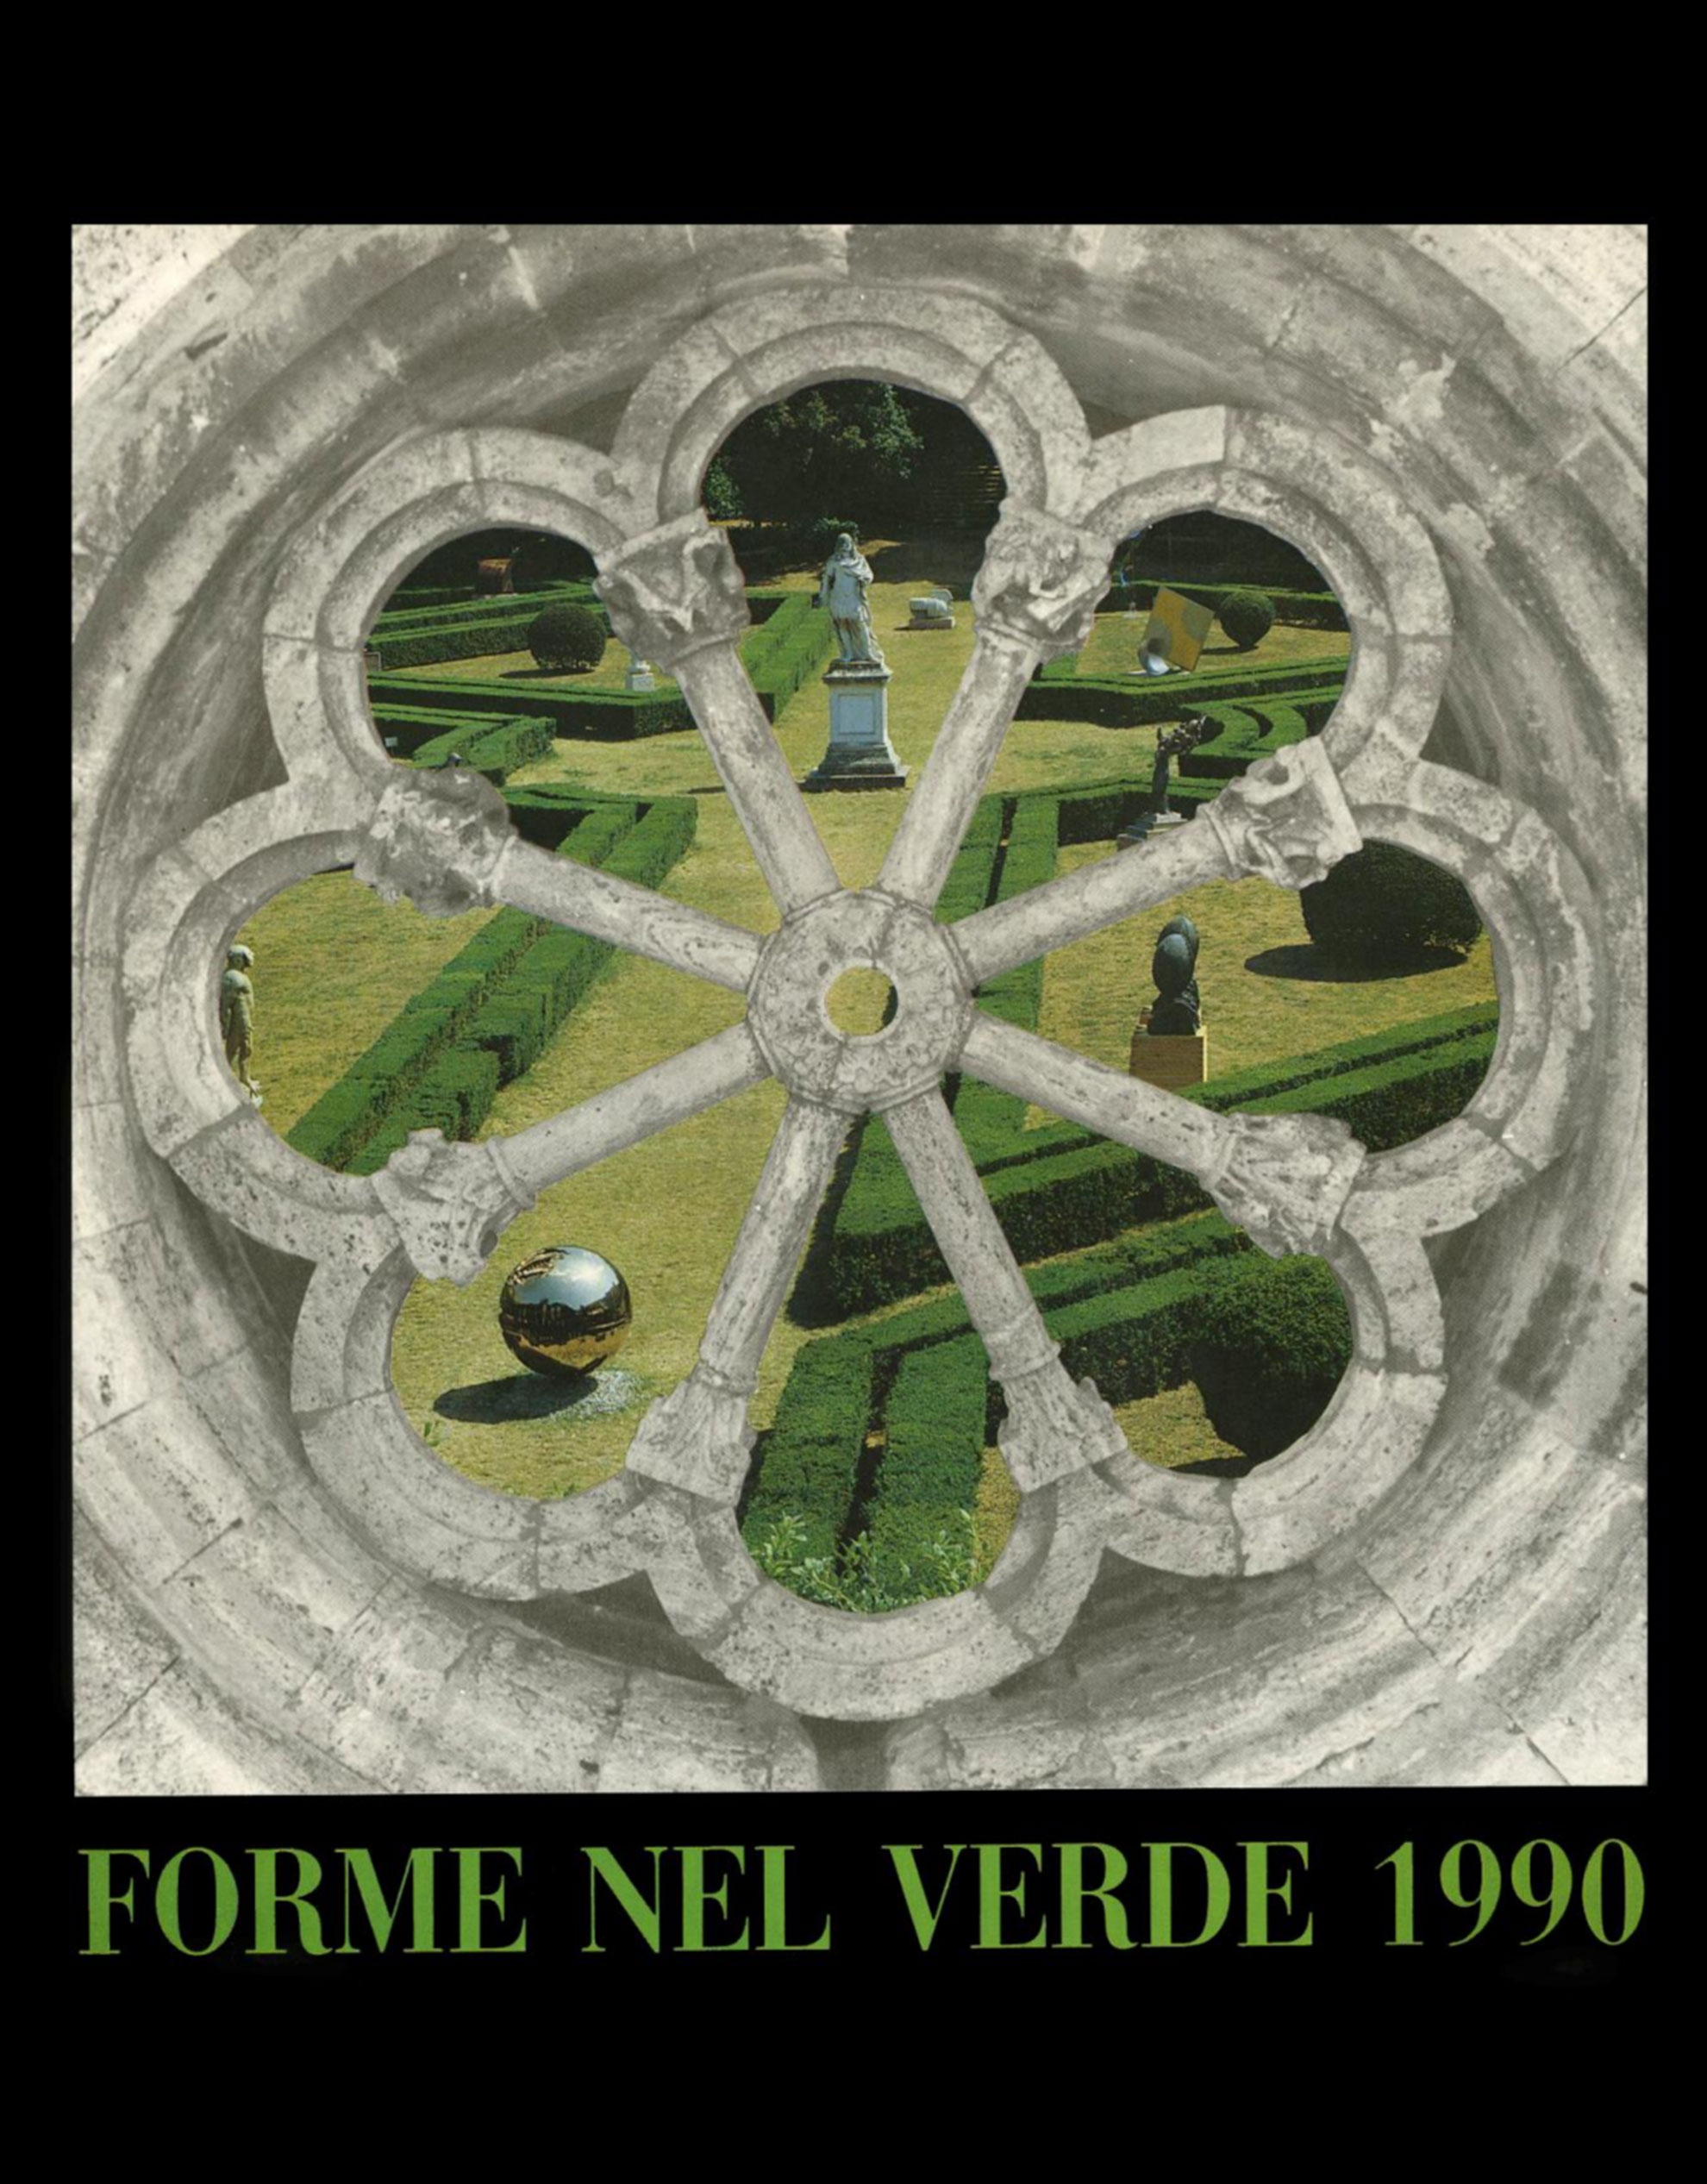 Catalogo Forme nel Verde 1990